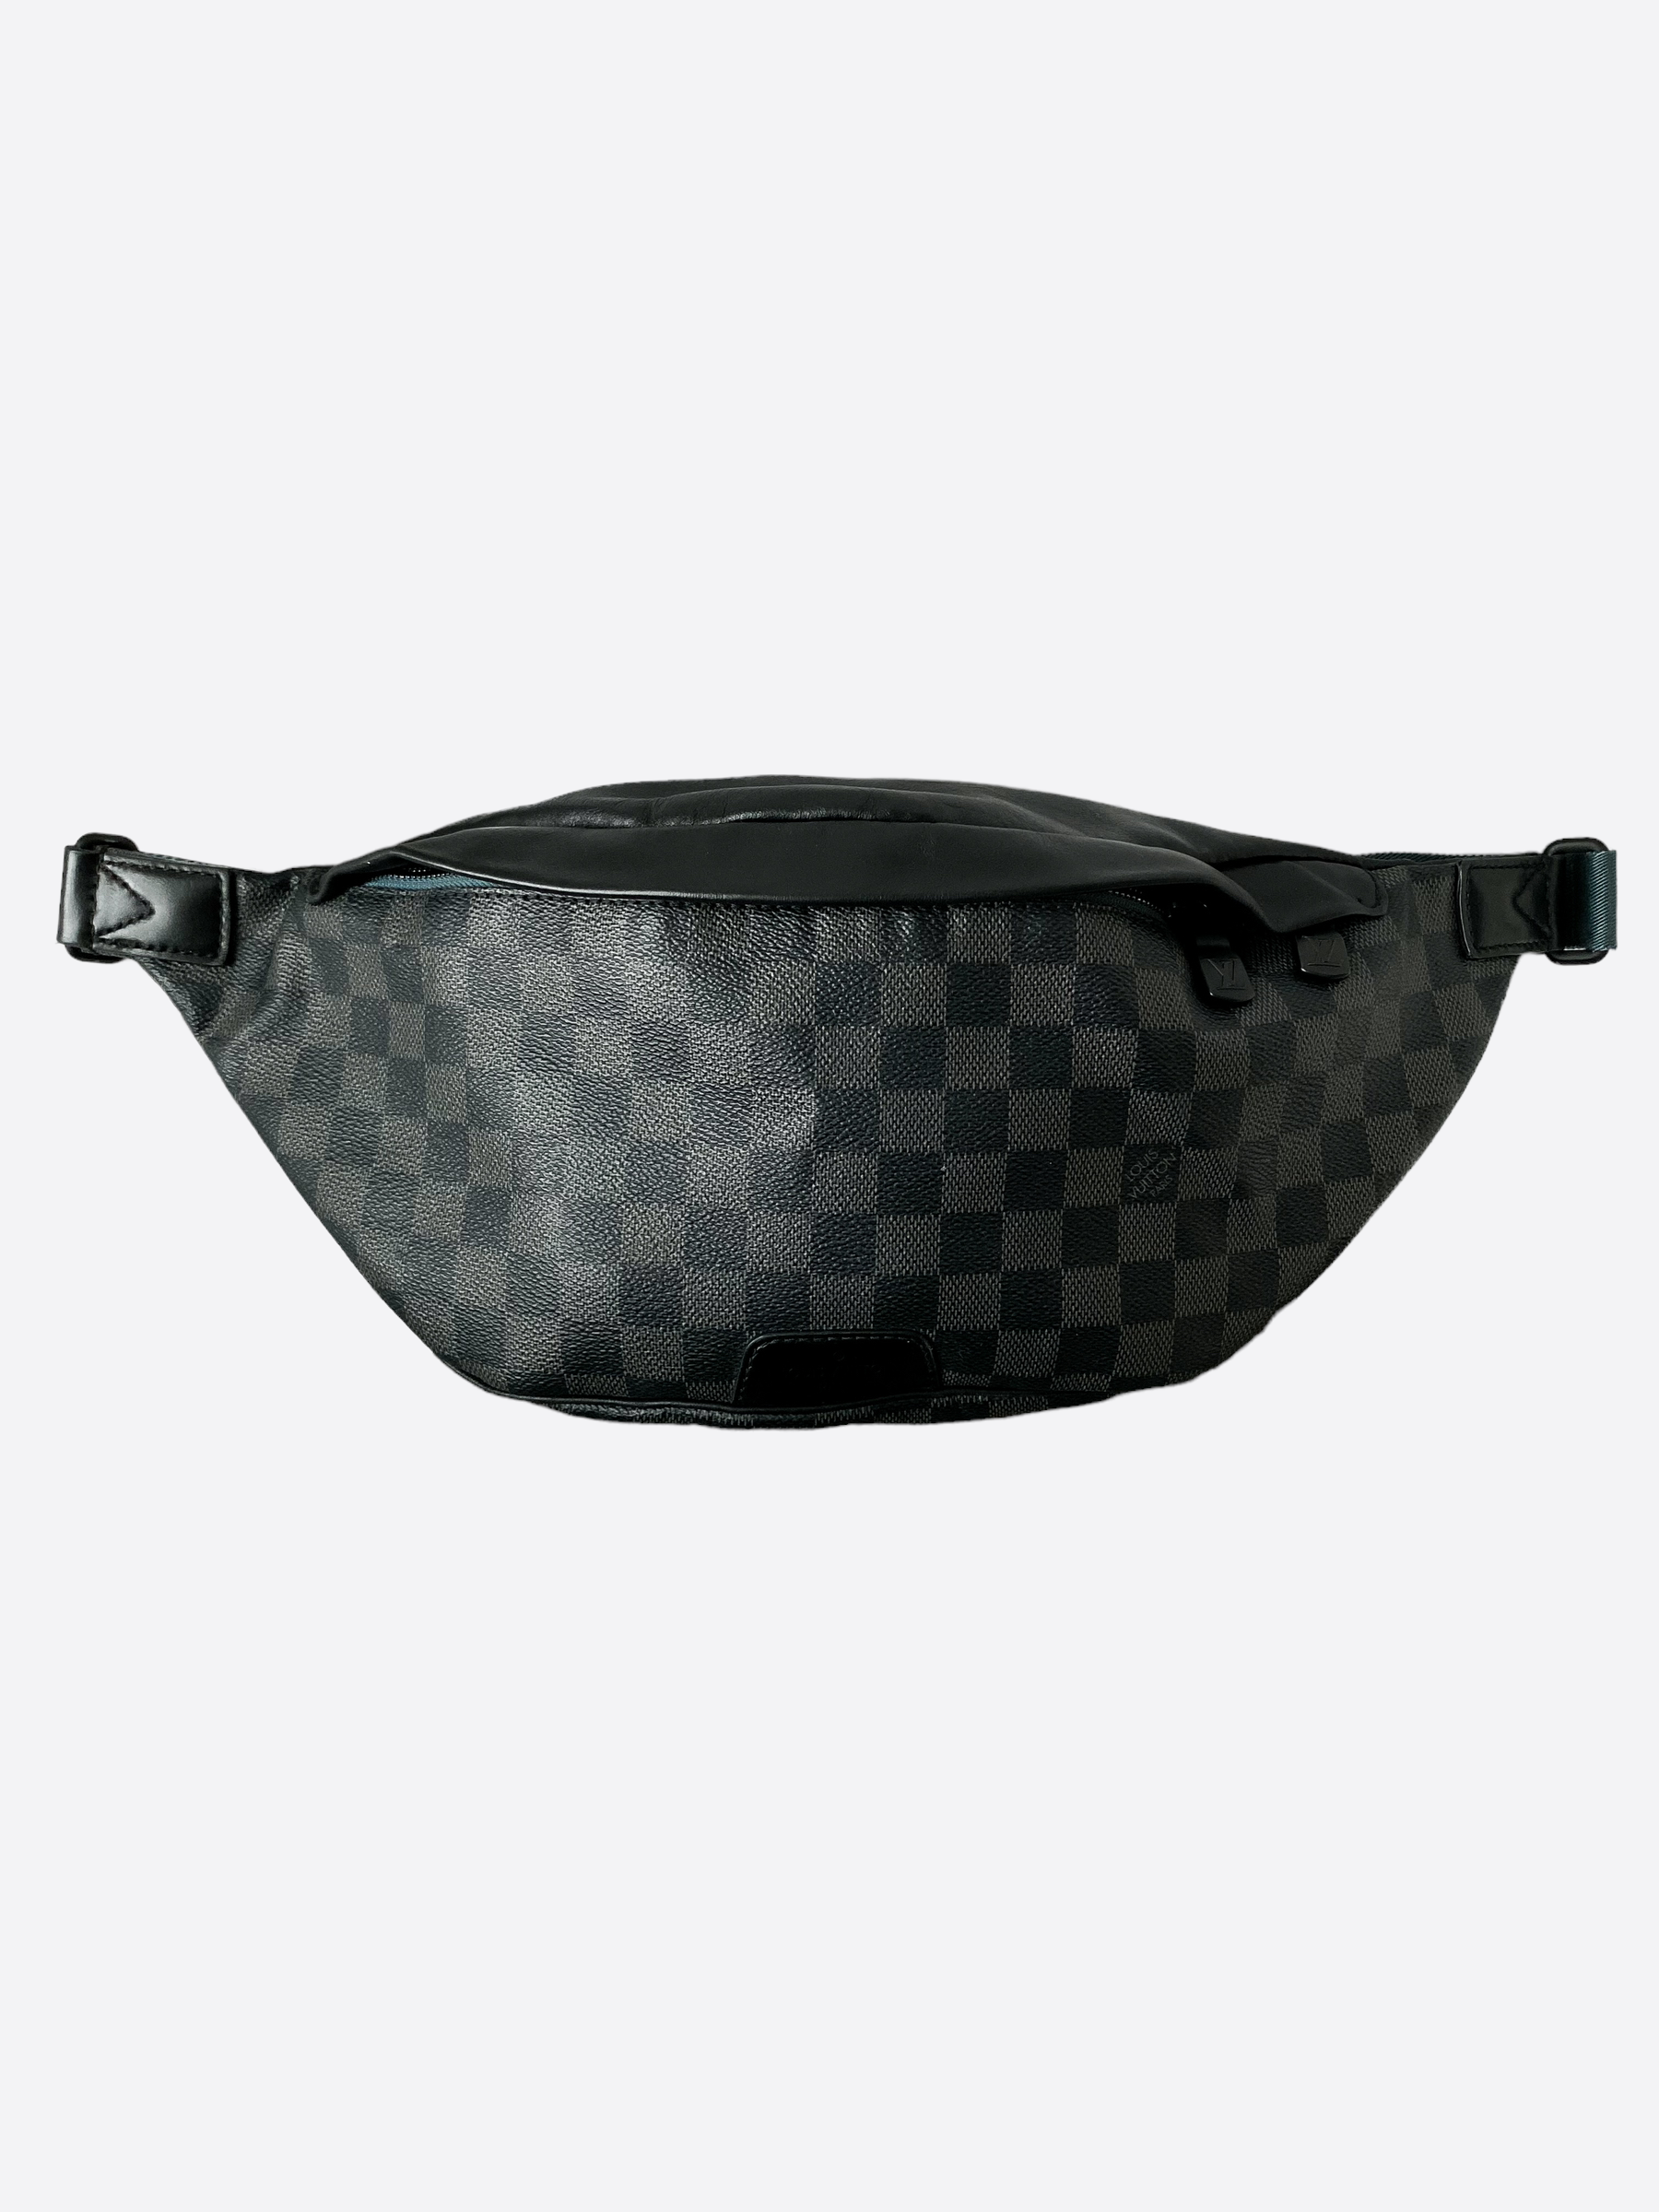 Louis Vuitton Damier Graphite Black Bumbag (LLRZ) 144010019304 RP/SA – Max  Pawn